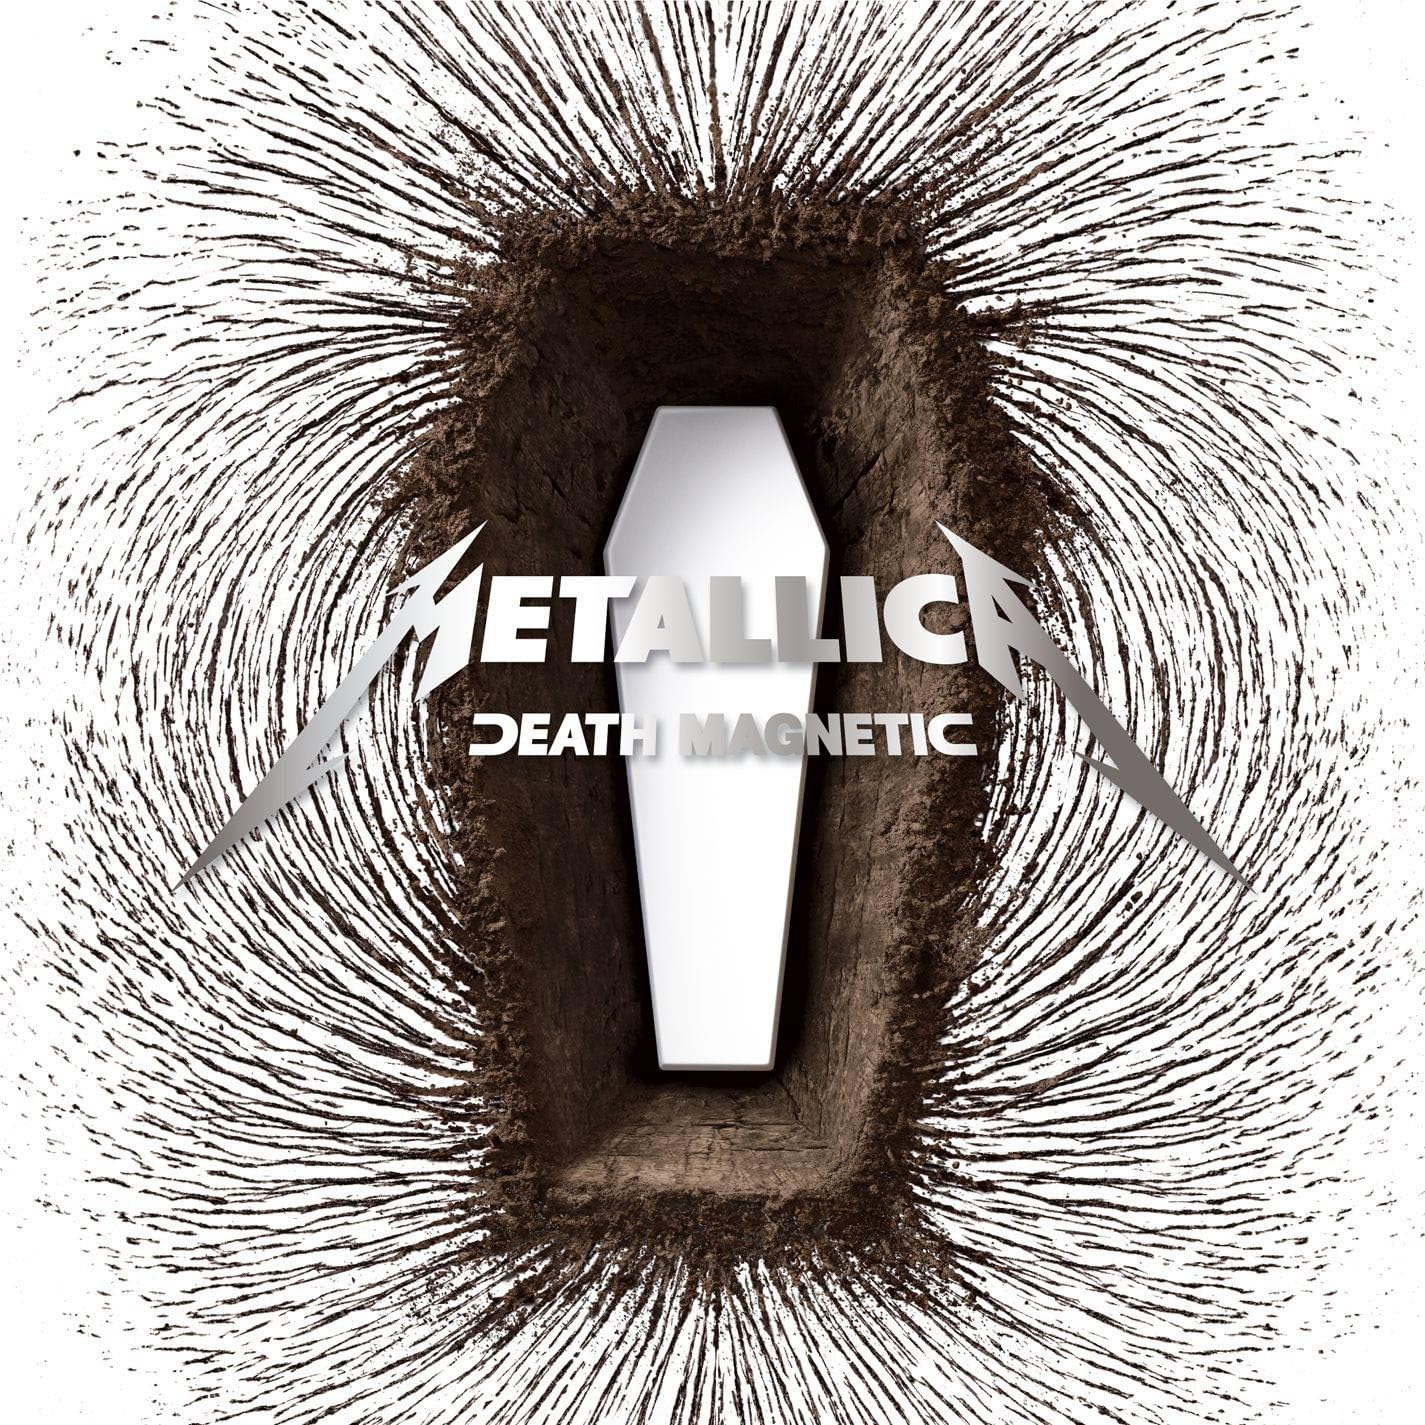 Metallica – Death Magnetic - 2 x VINYL LP SET